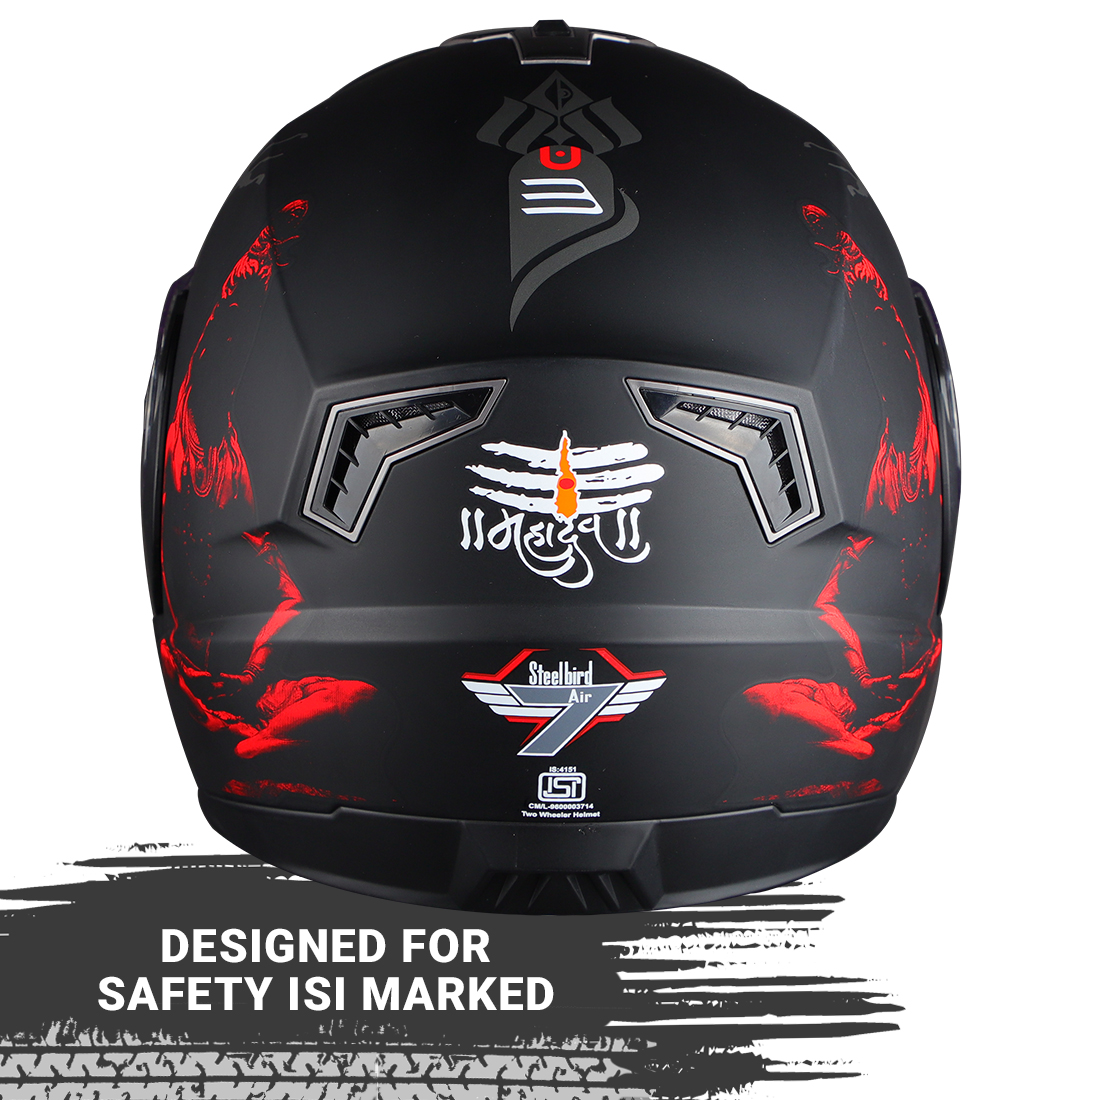 Steelbird SBA-7 Mahadev ISI Certified Flip-Up Helmet For Men And Women With Sun Shield (Matt Black Red With Clear Visor)